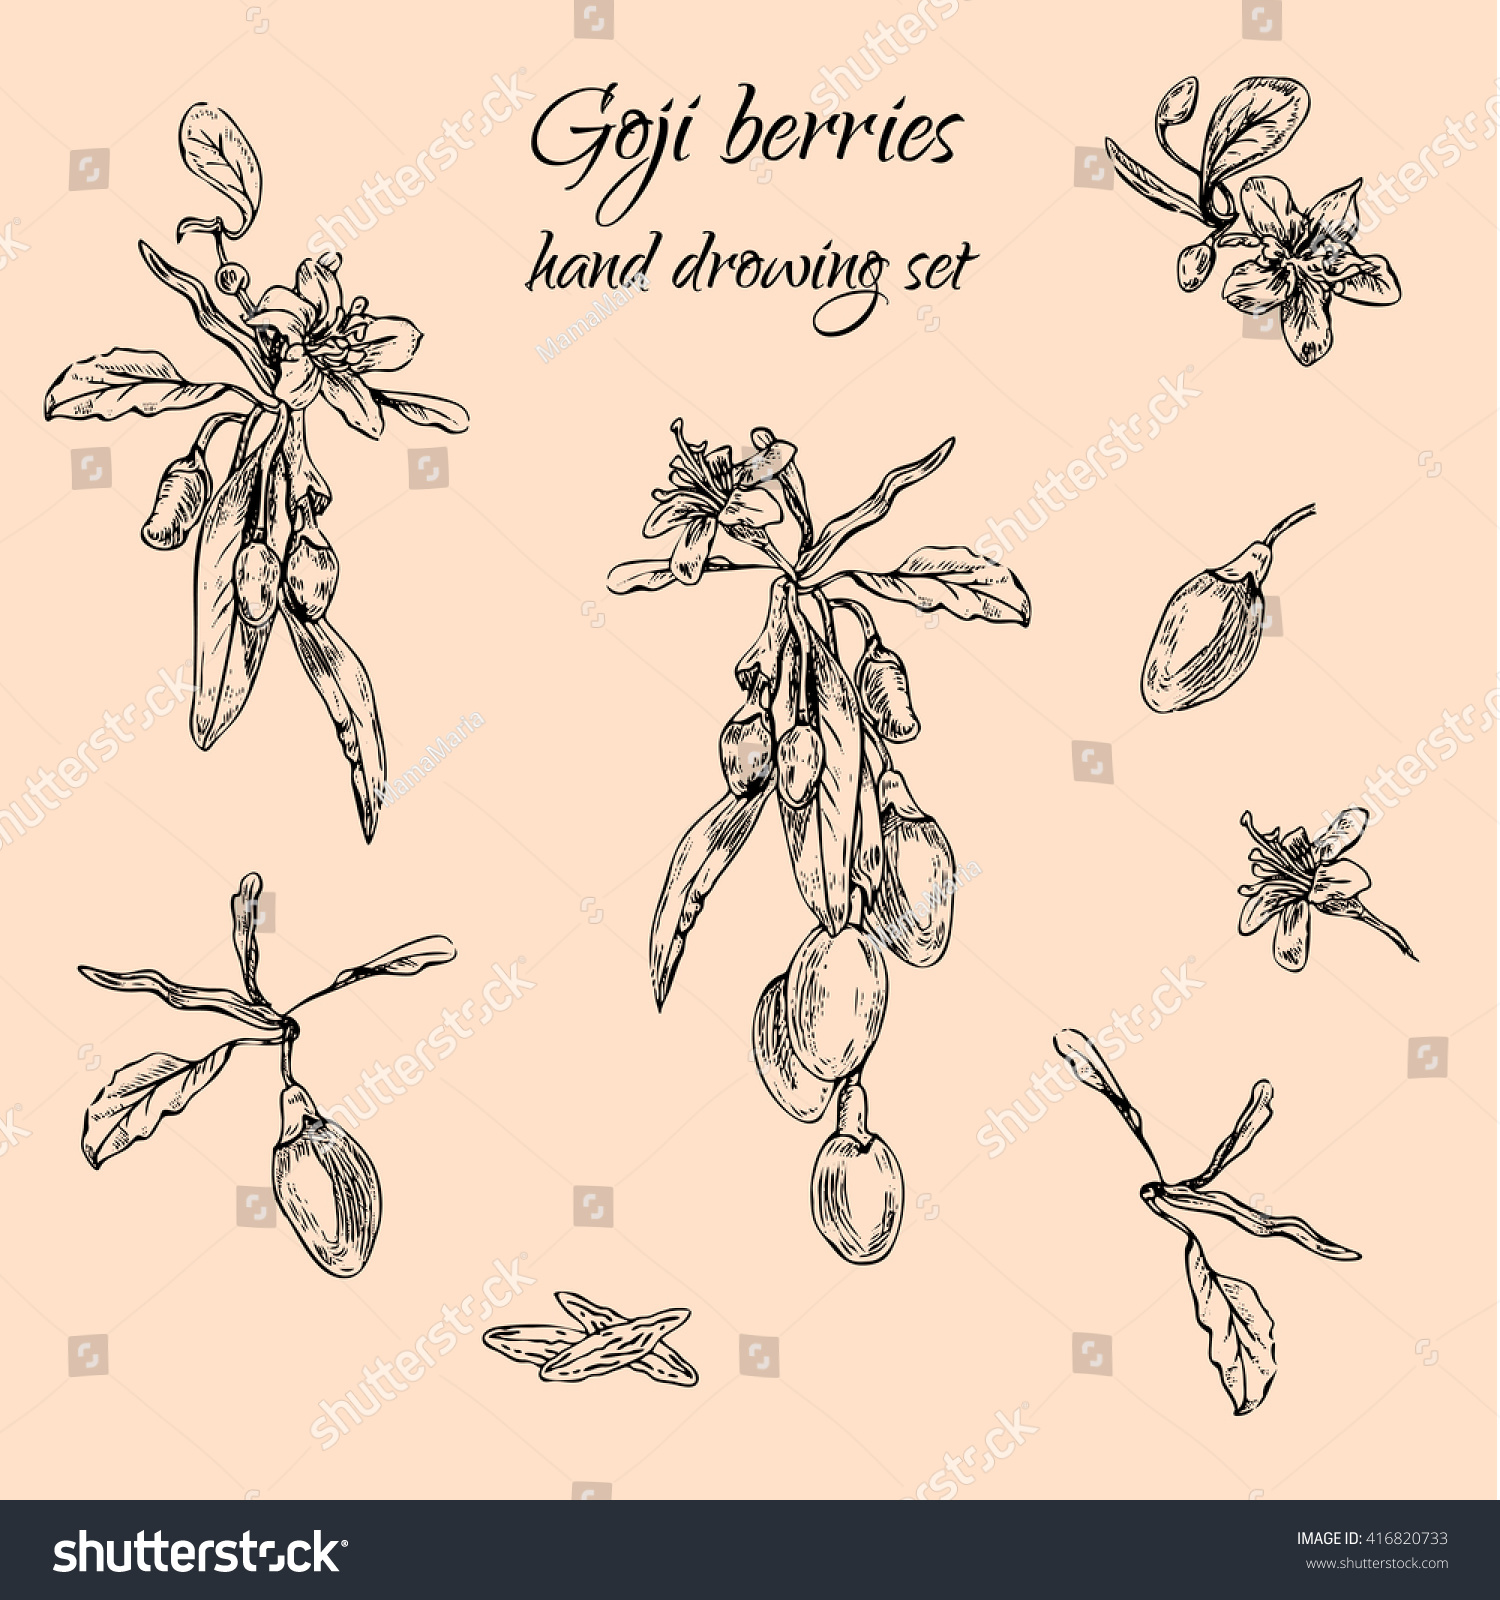 Hand drawn goji berries monochrome set.  Engraving illustration.  Nature organic super-foods design elements.  Vector illustration  #416820733